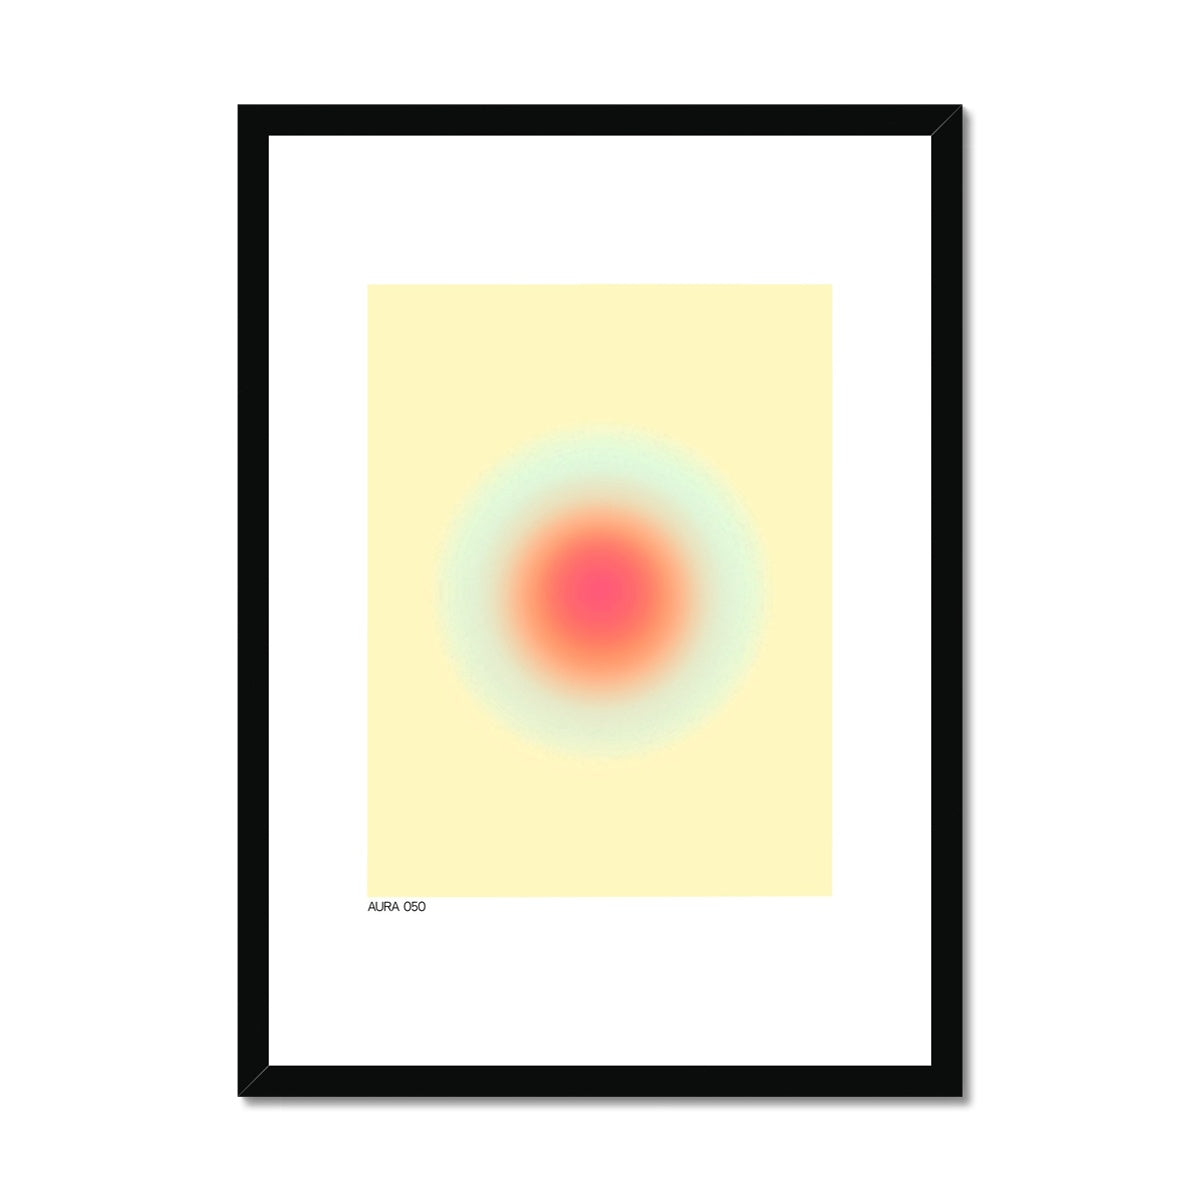 aura 050 Framed & Mounted Print